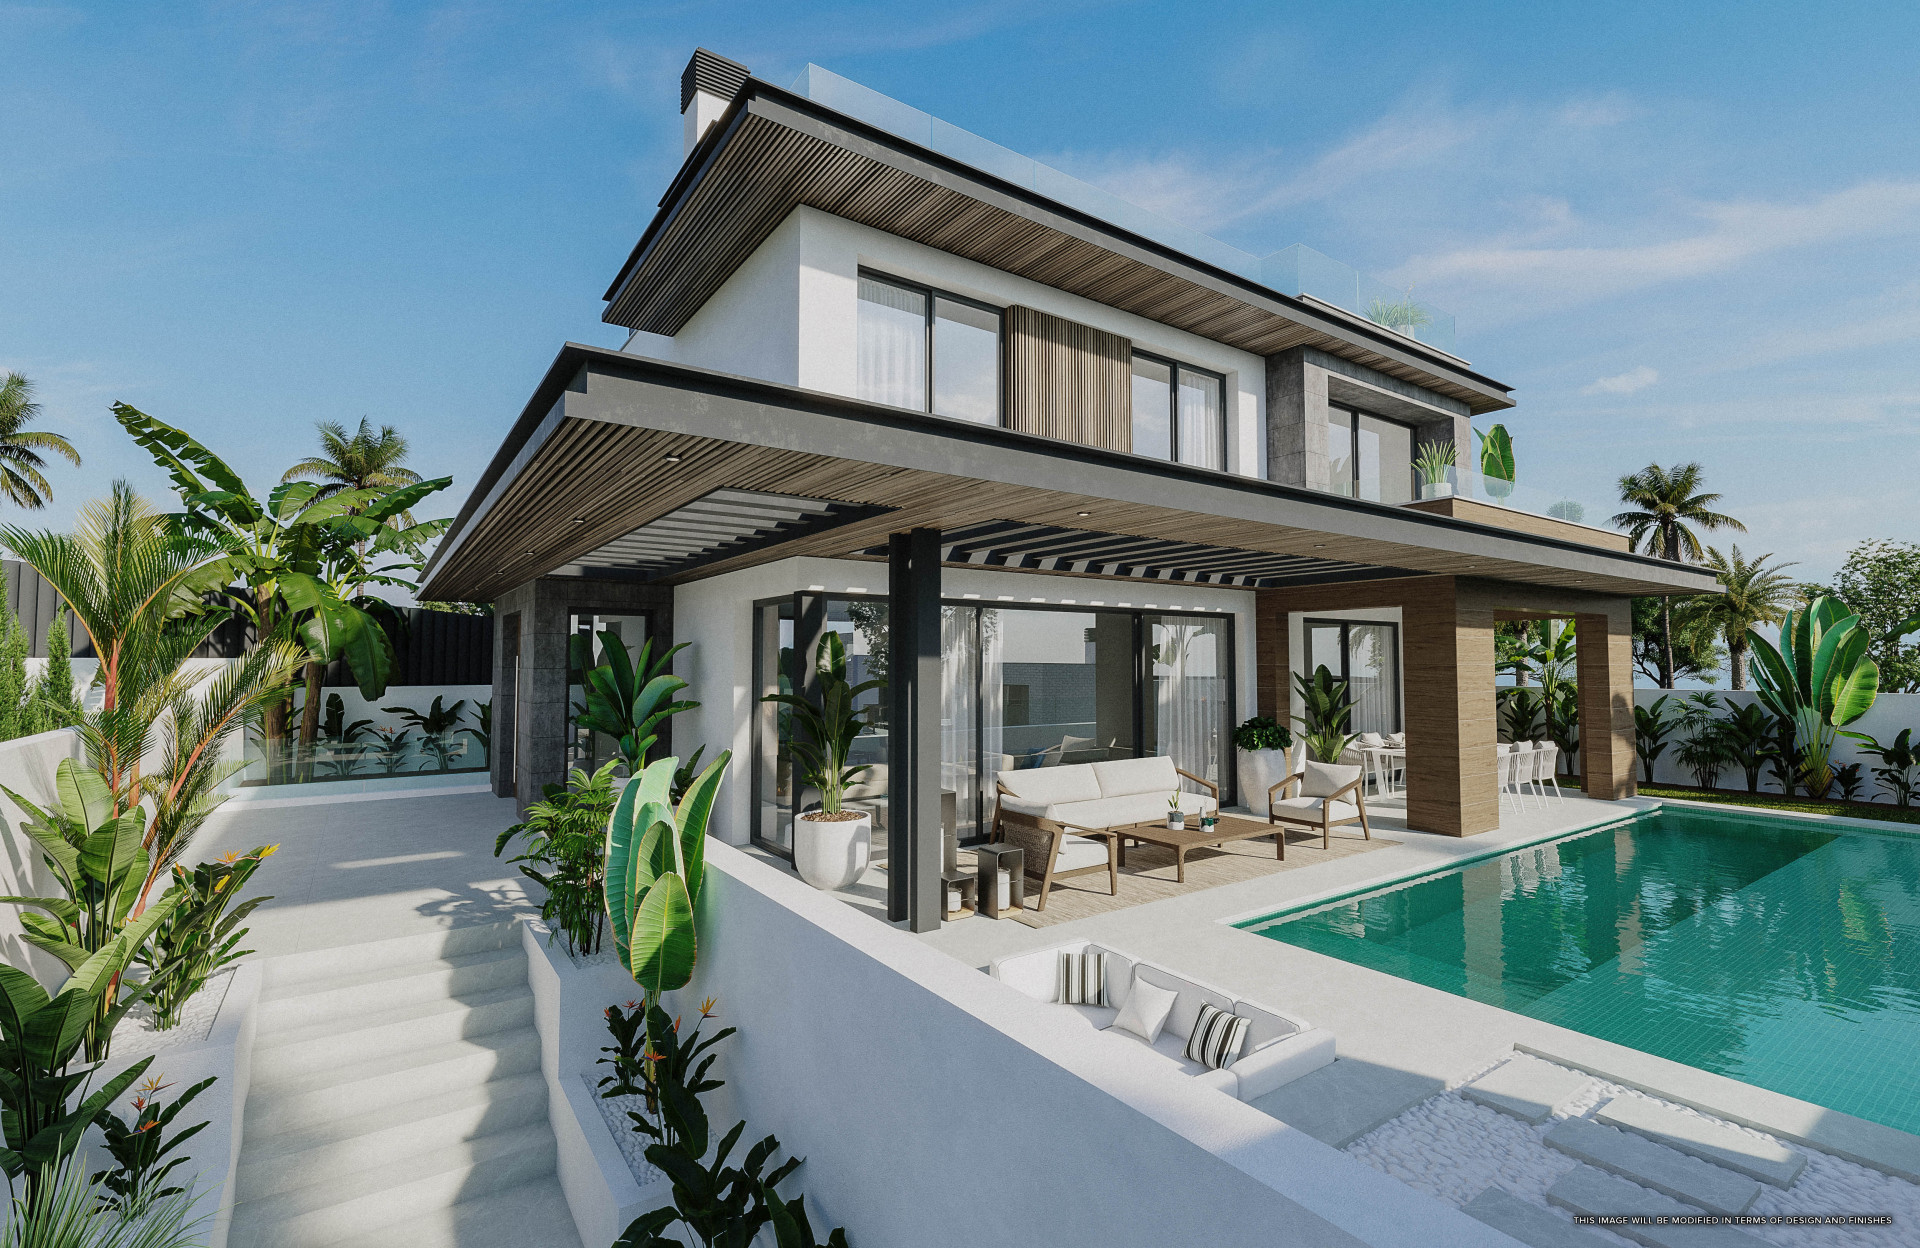 One Bali Villas: New residential development of 19 luxury villas with panoramic sea views located in La Cala de Mijas.